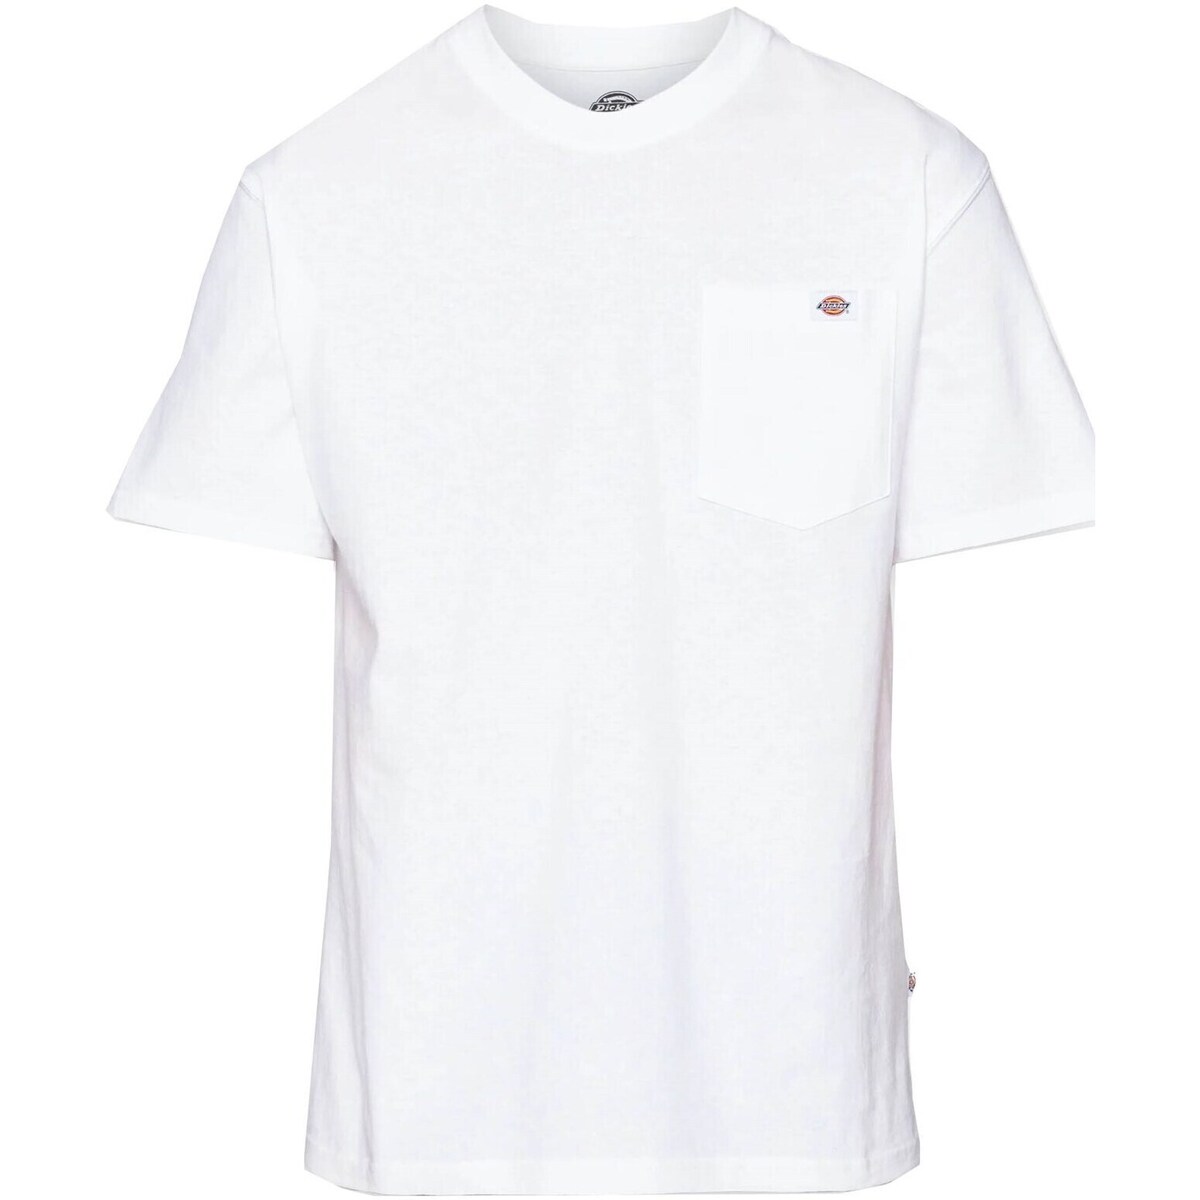 Vêtements Homme zip check print shirt DK0A4YFCWHX1 Blanc